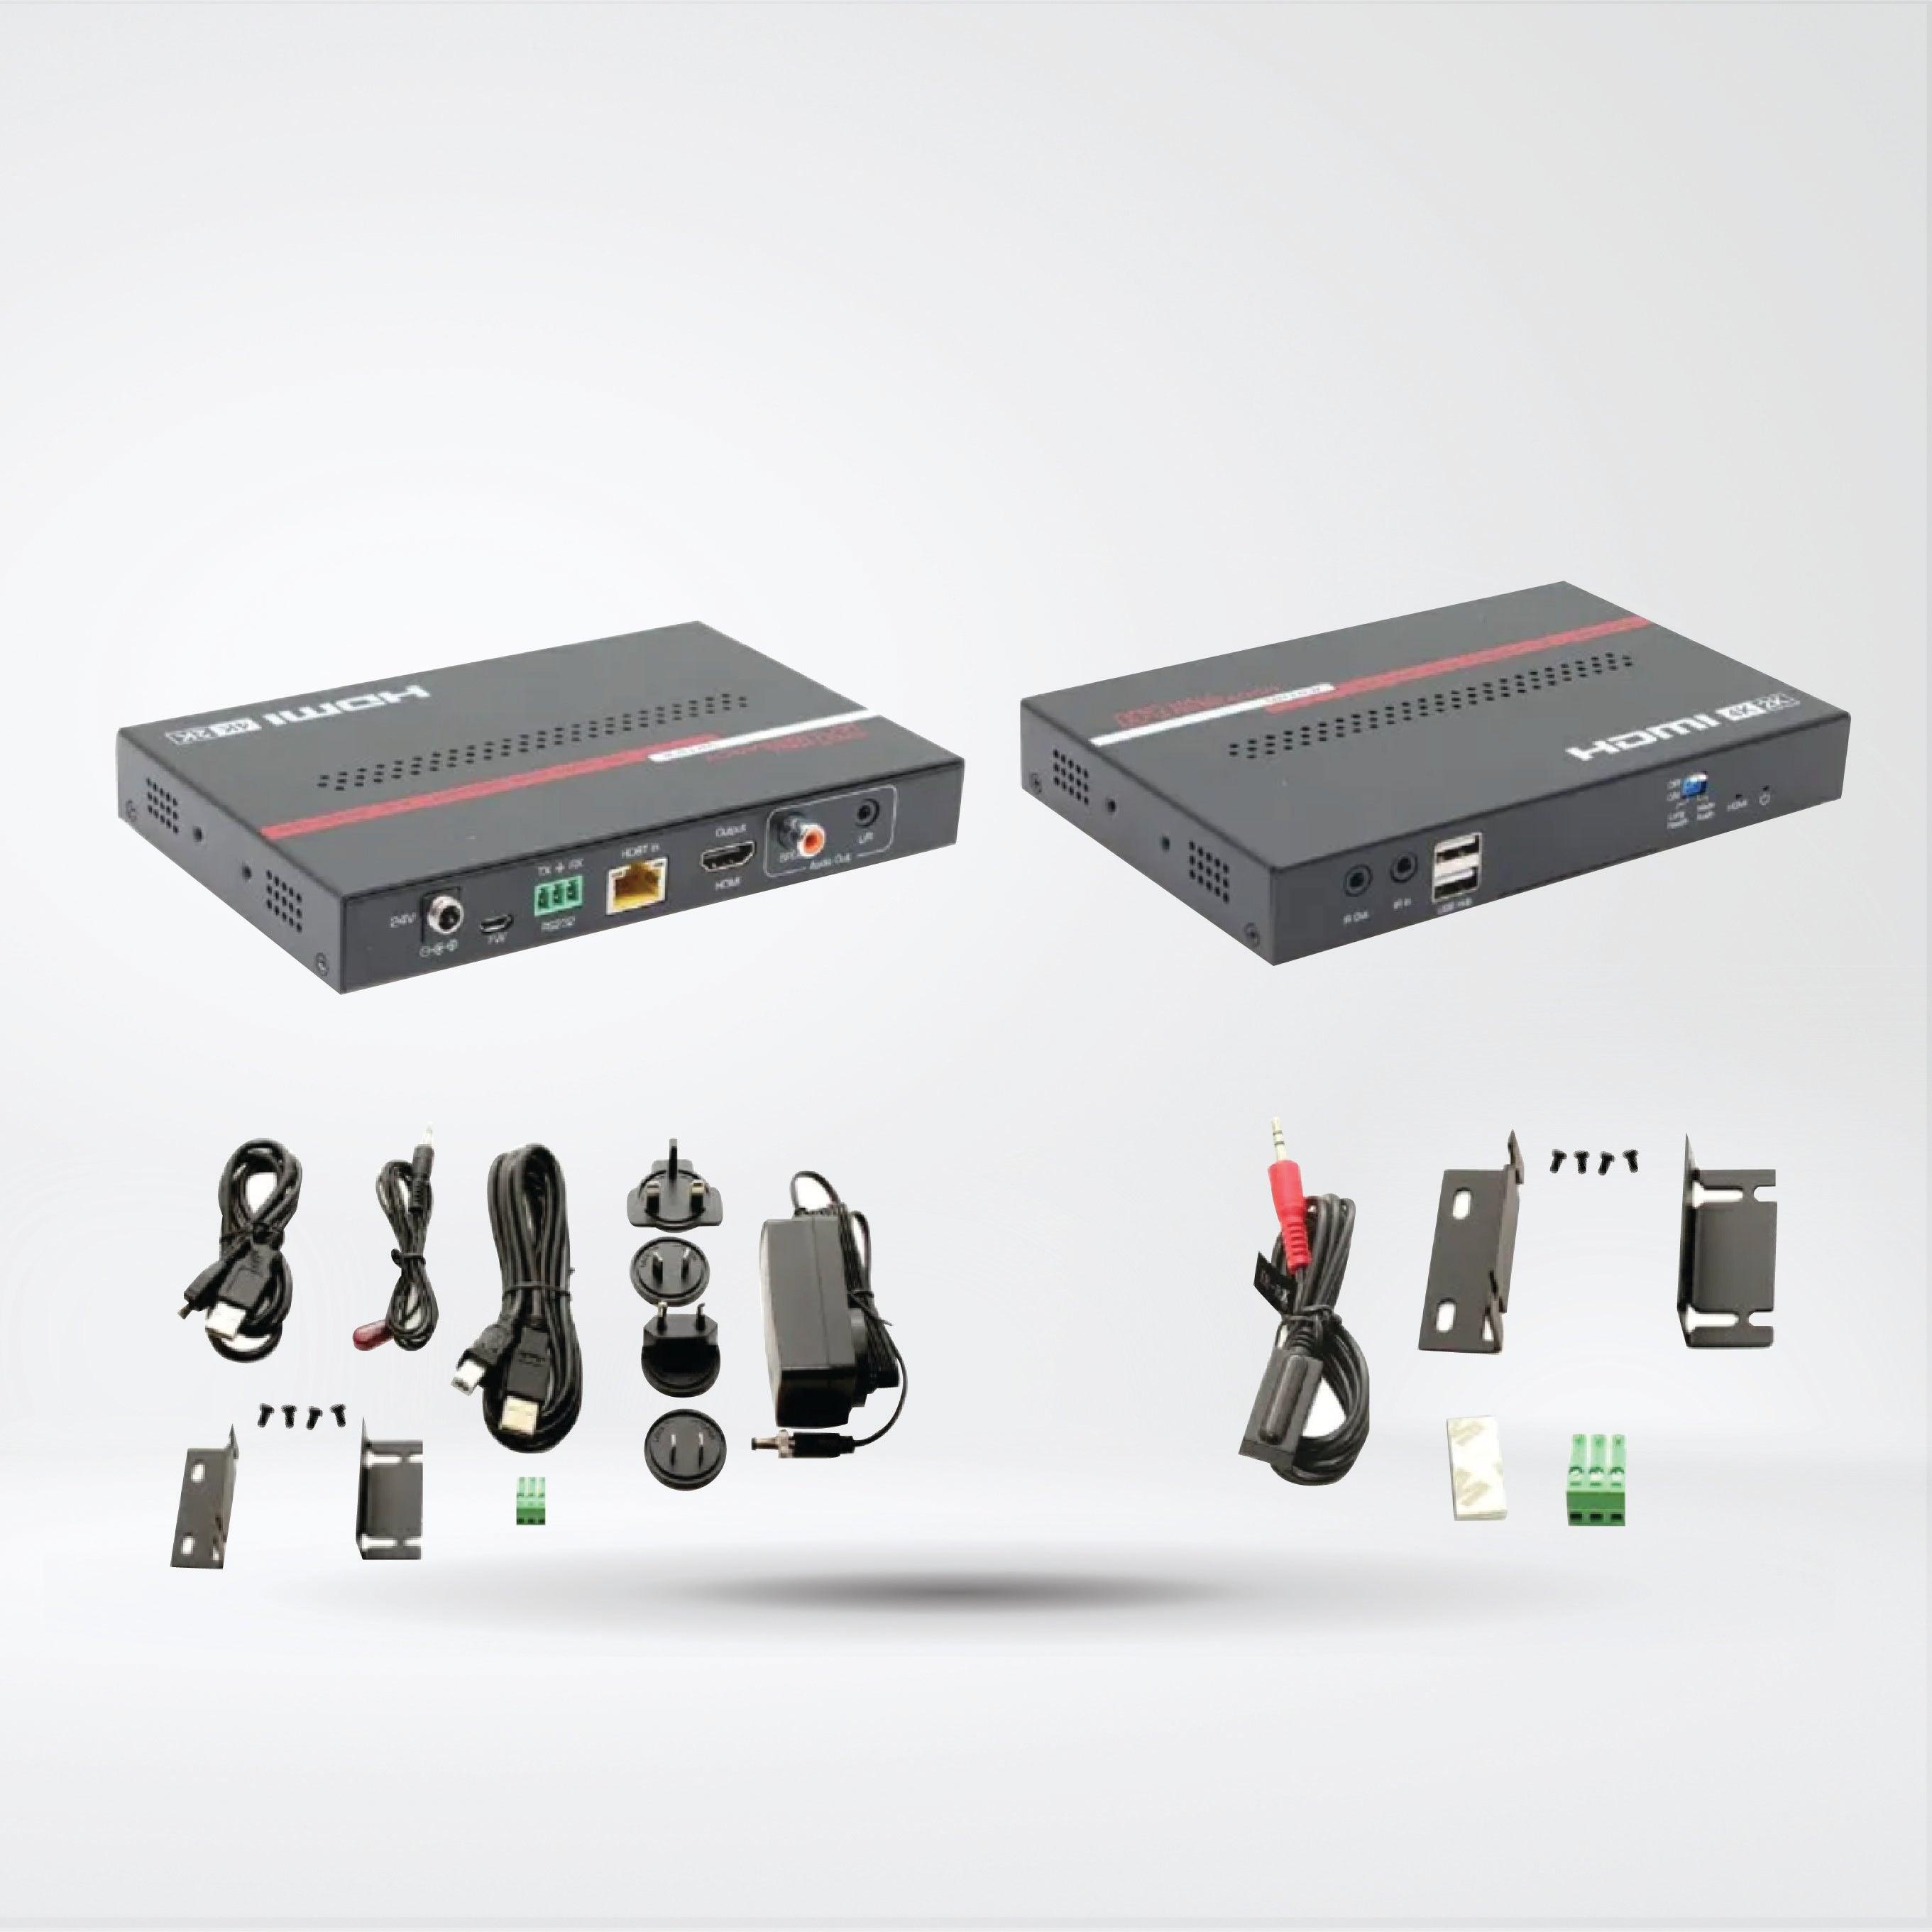 UH18-S 4K Video and USB HDBaseT 2.0 Extender (Sender + Receiver) - Riverplus